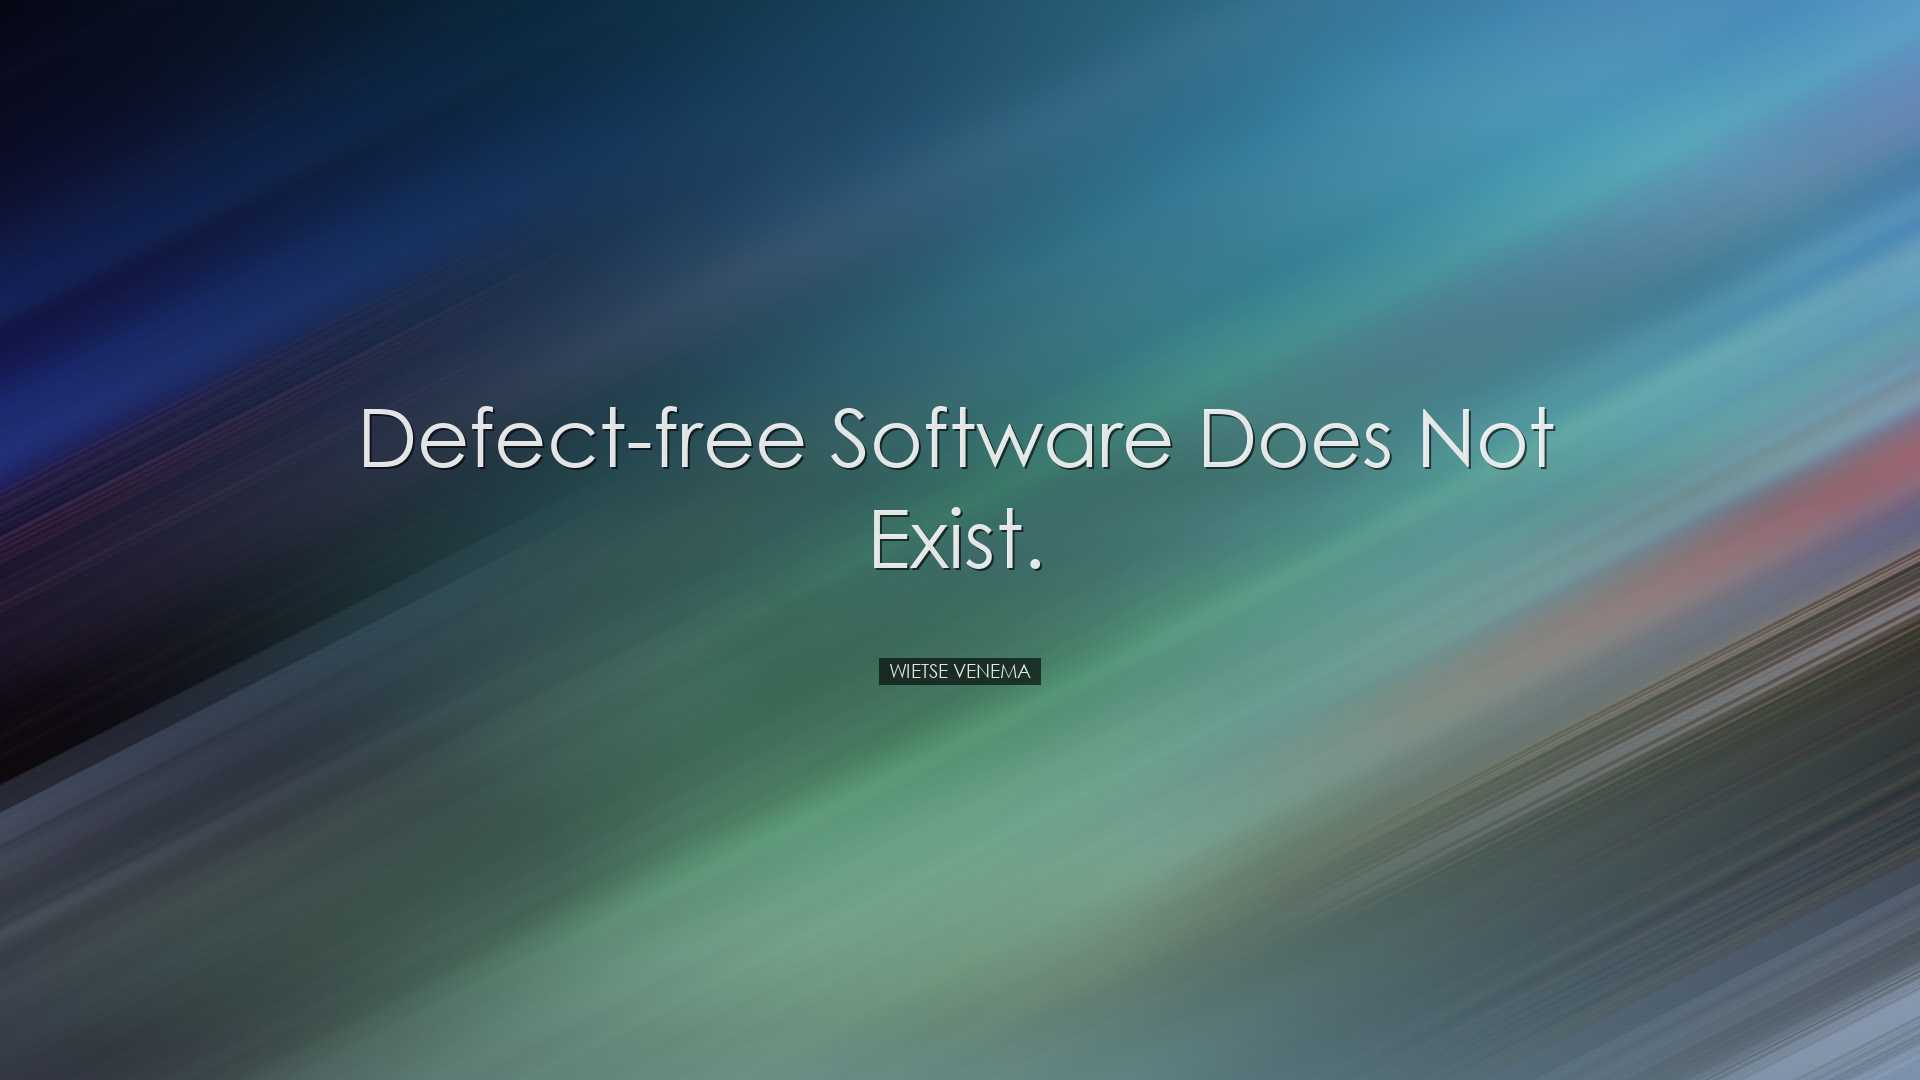 Defect-free software does not exist. - Wietse Venema